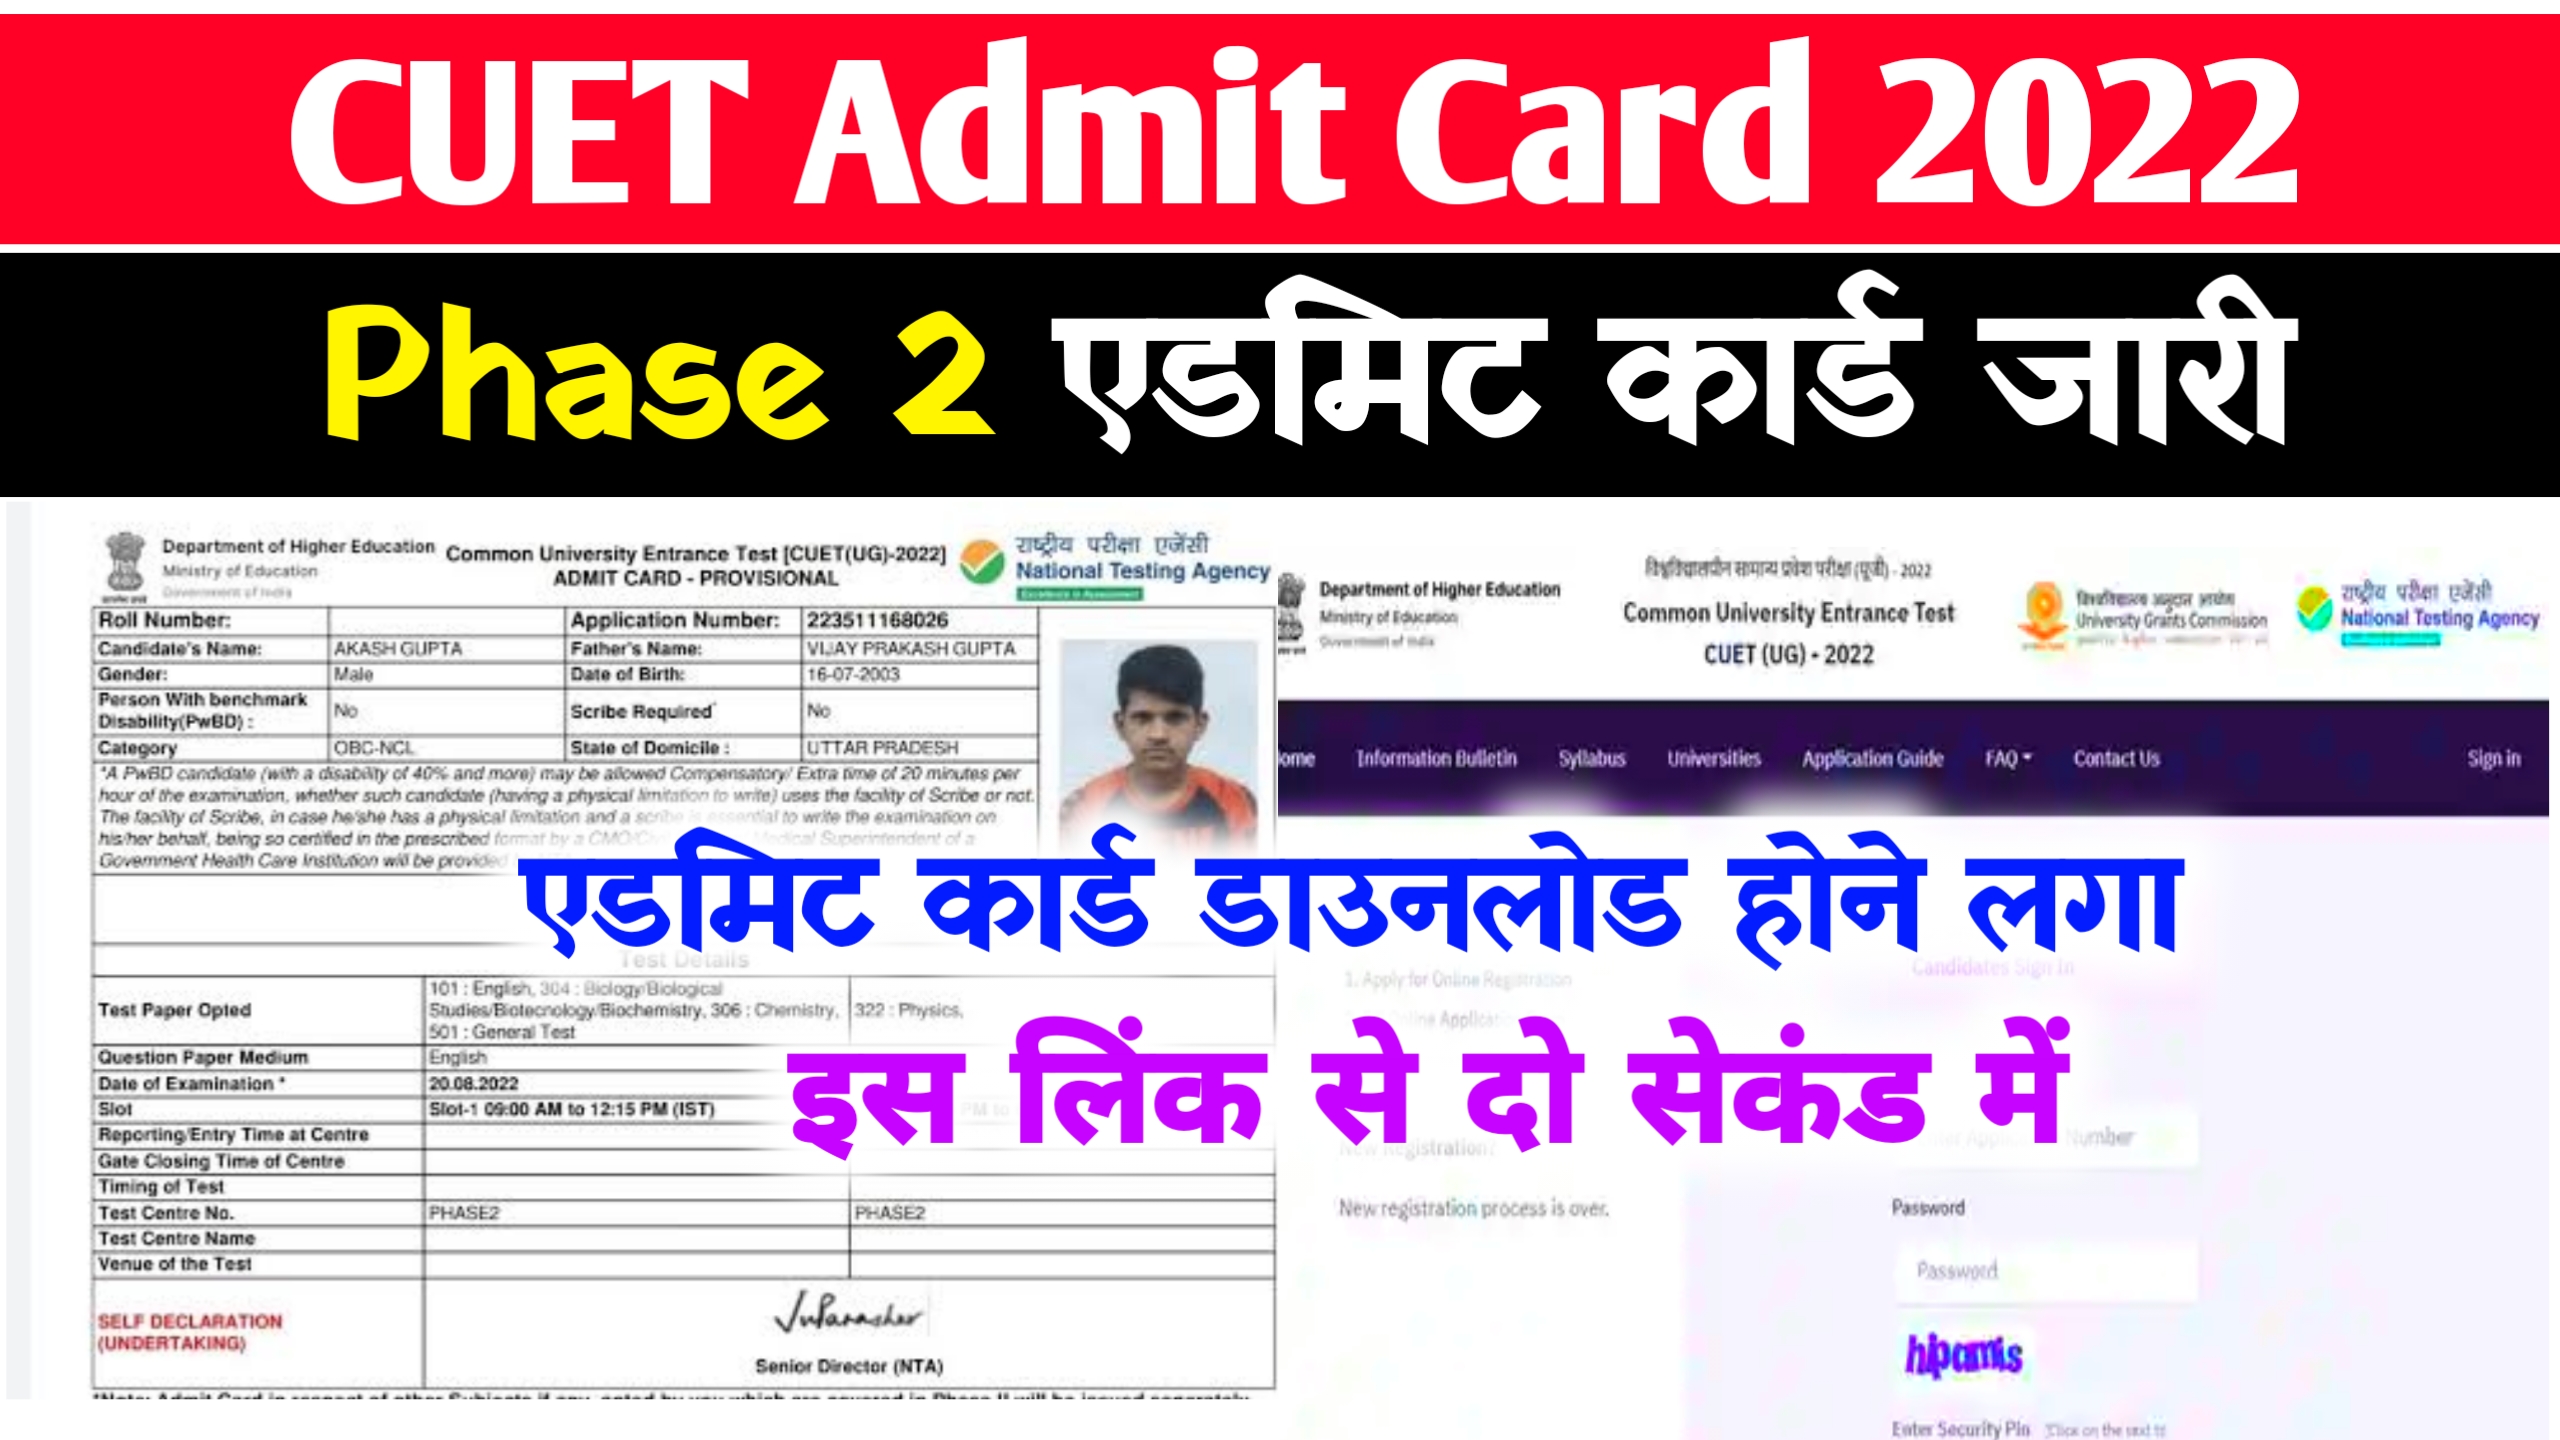 Cuet.samarth.ac.in ~ Cuet Phase 2 Admit Card 2022 Download Link Active